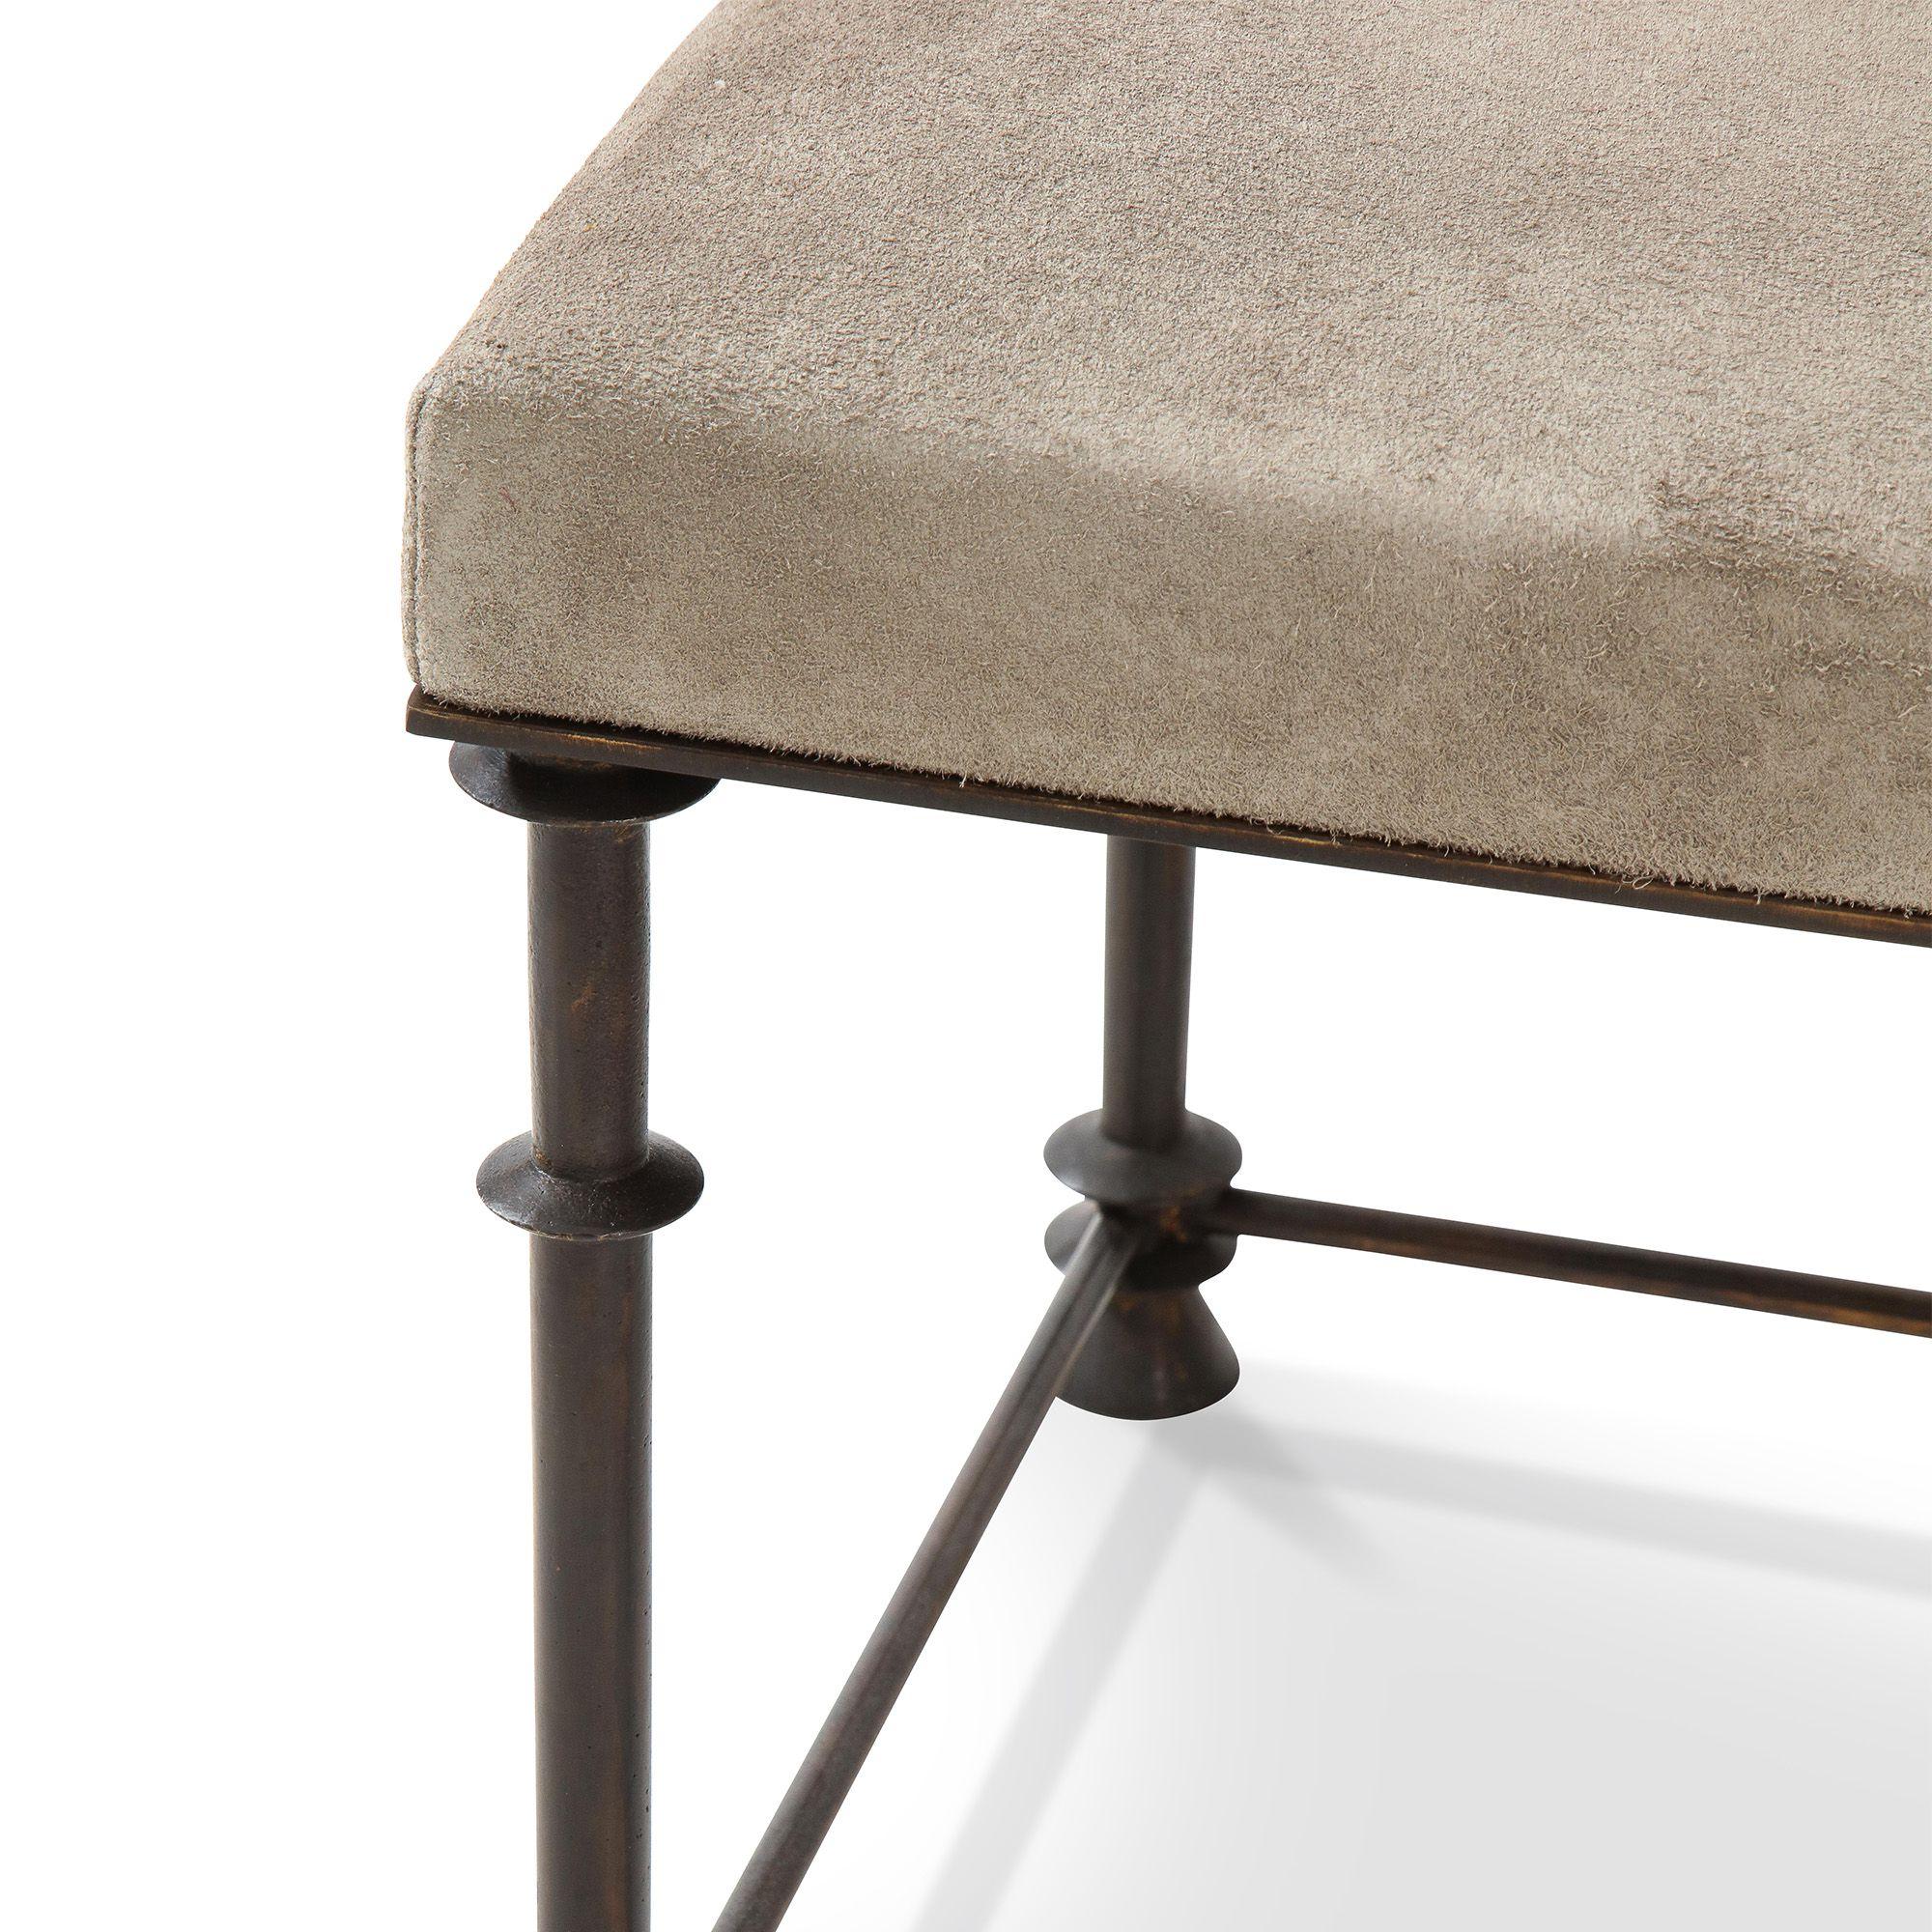 An elegant custom made bronze legged stool covered with 